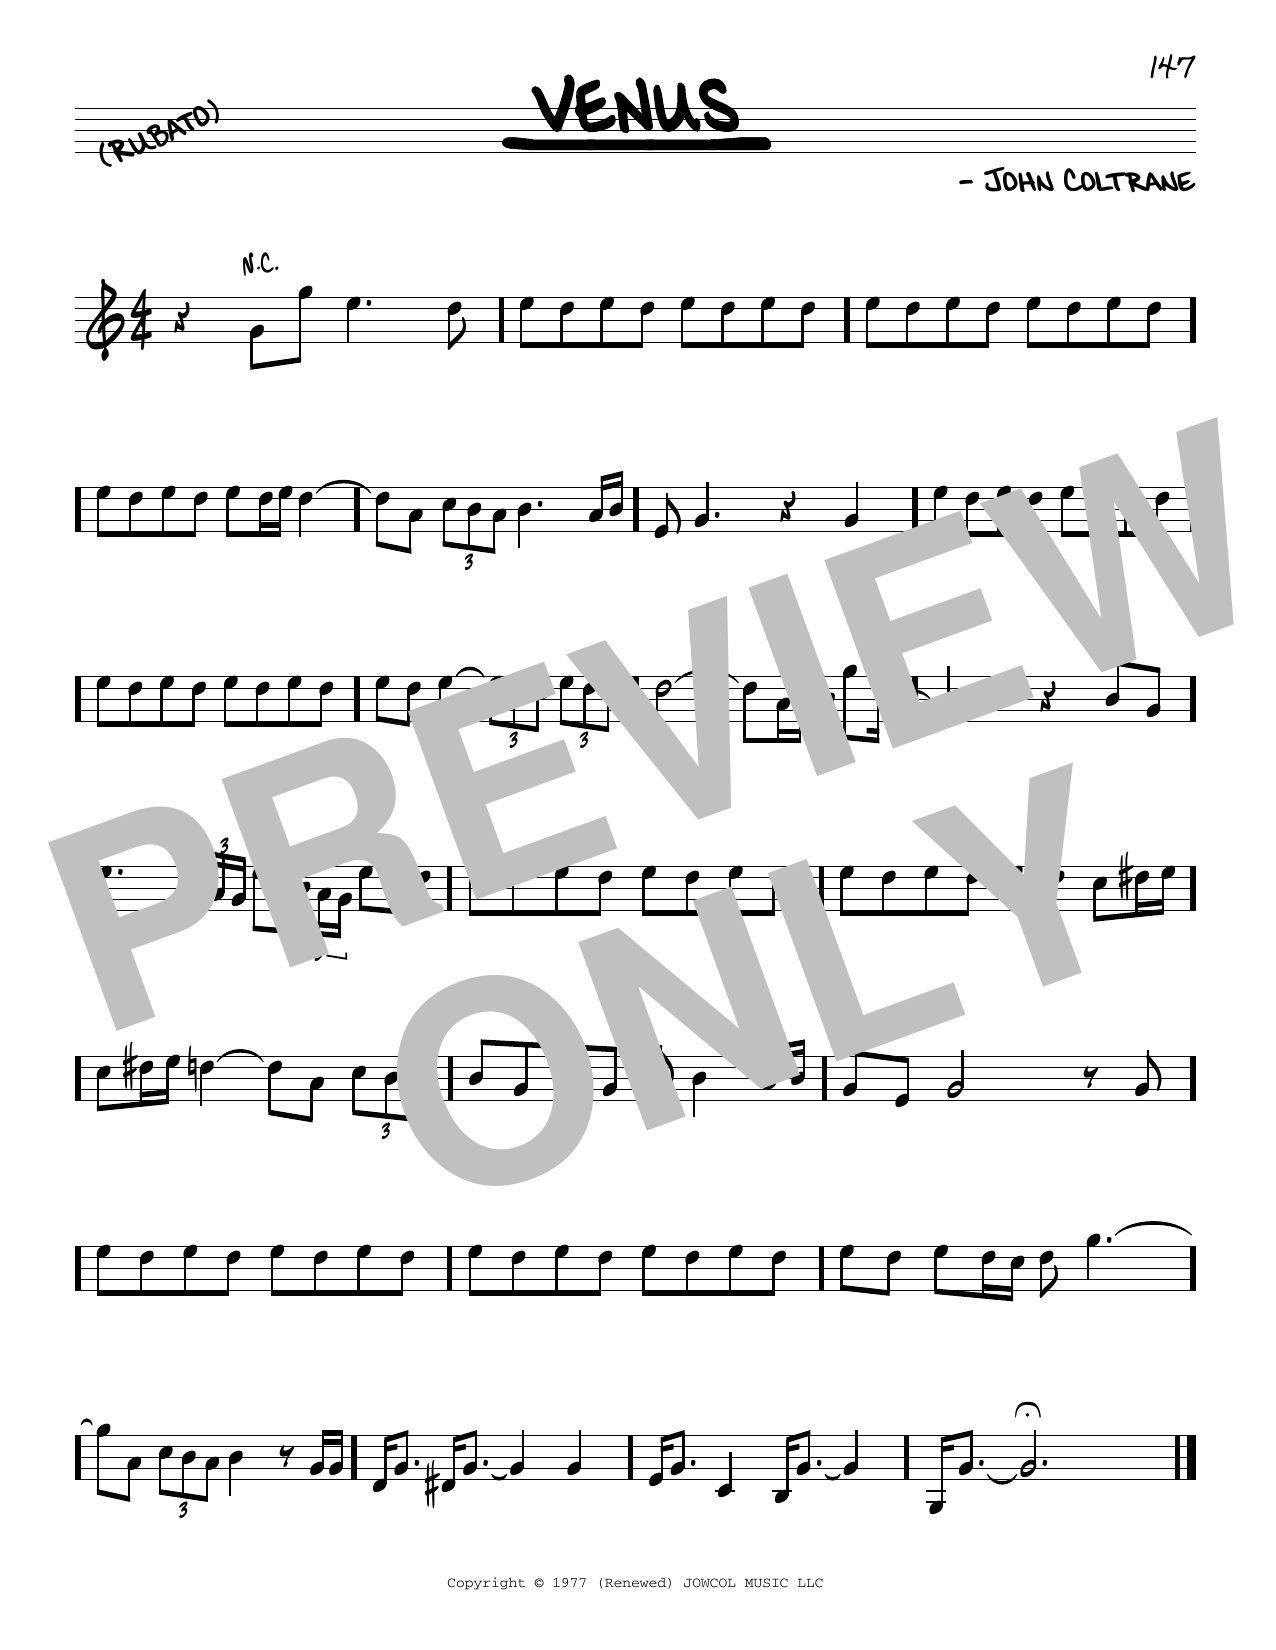 John Coltrane Venus Sheet Music Notes & Chords for Real Book – Melody & Chords - Download or Print PDF